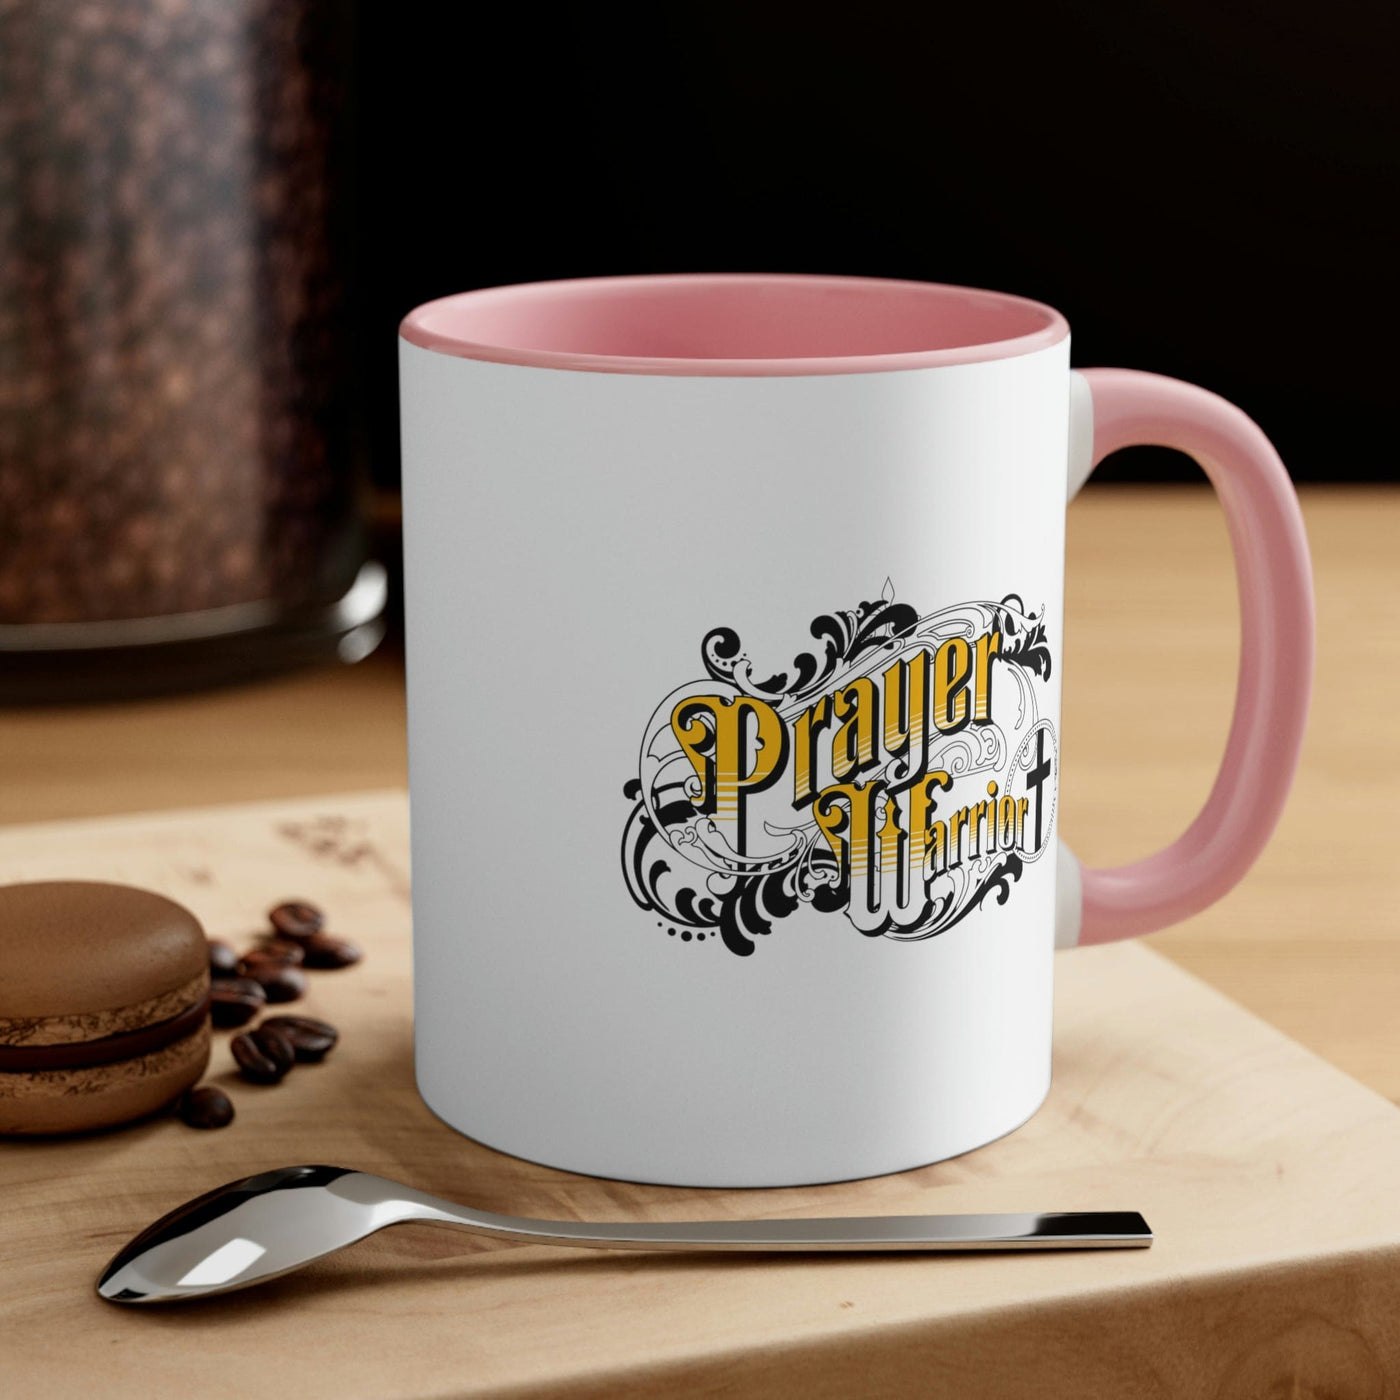 Two-tone Accent Ceramic Mug 11oz Prayer Warrior Christian Inspiration S6